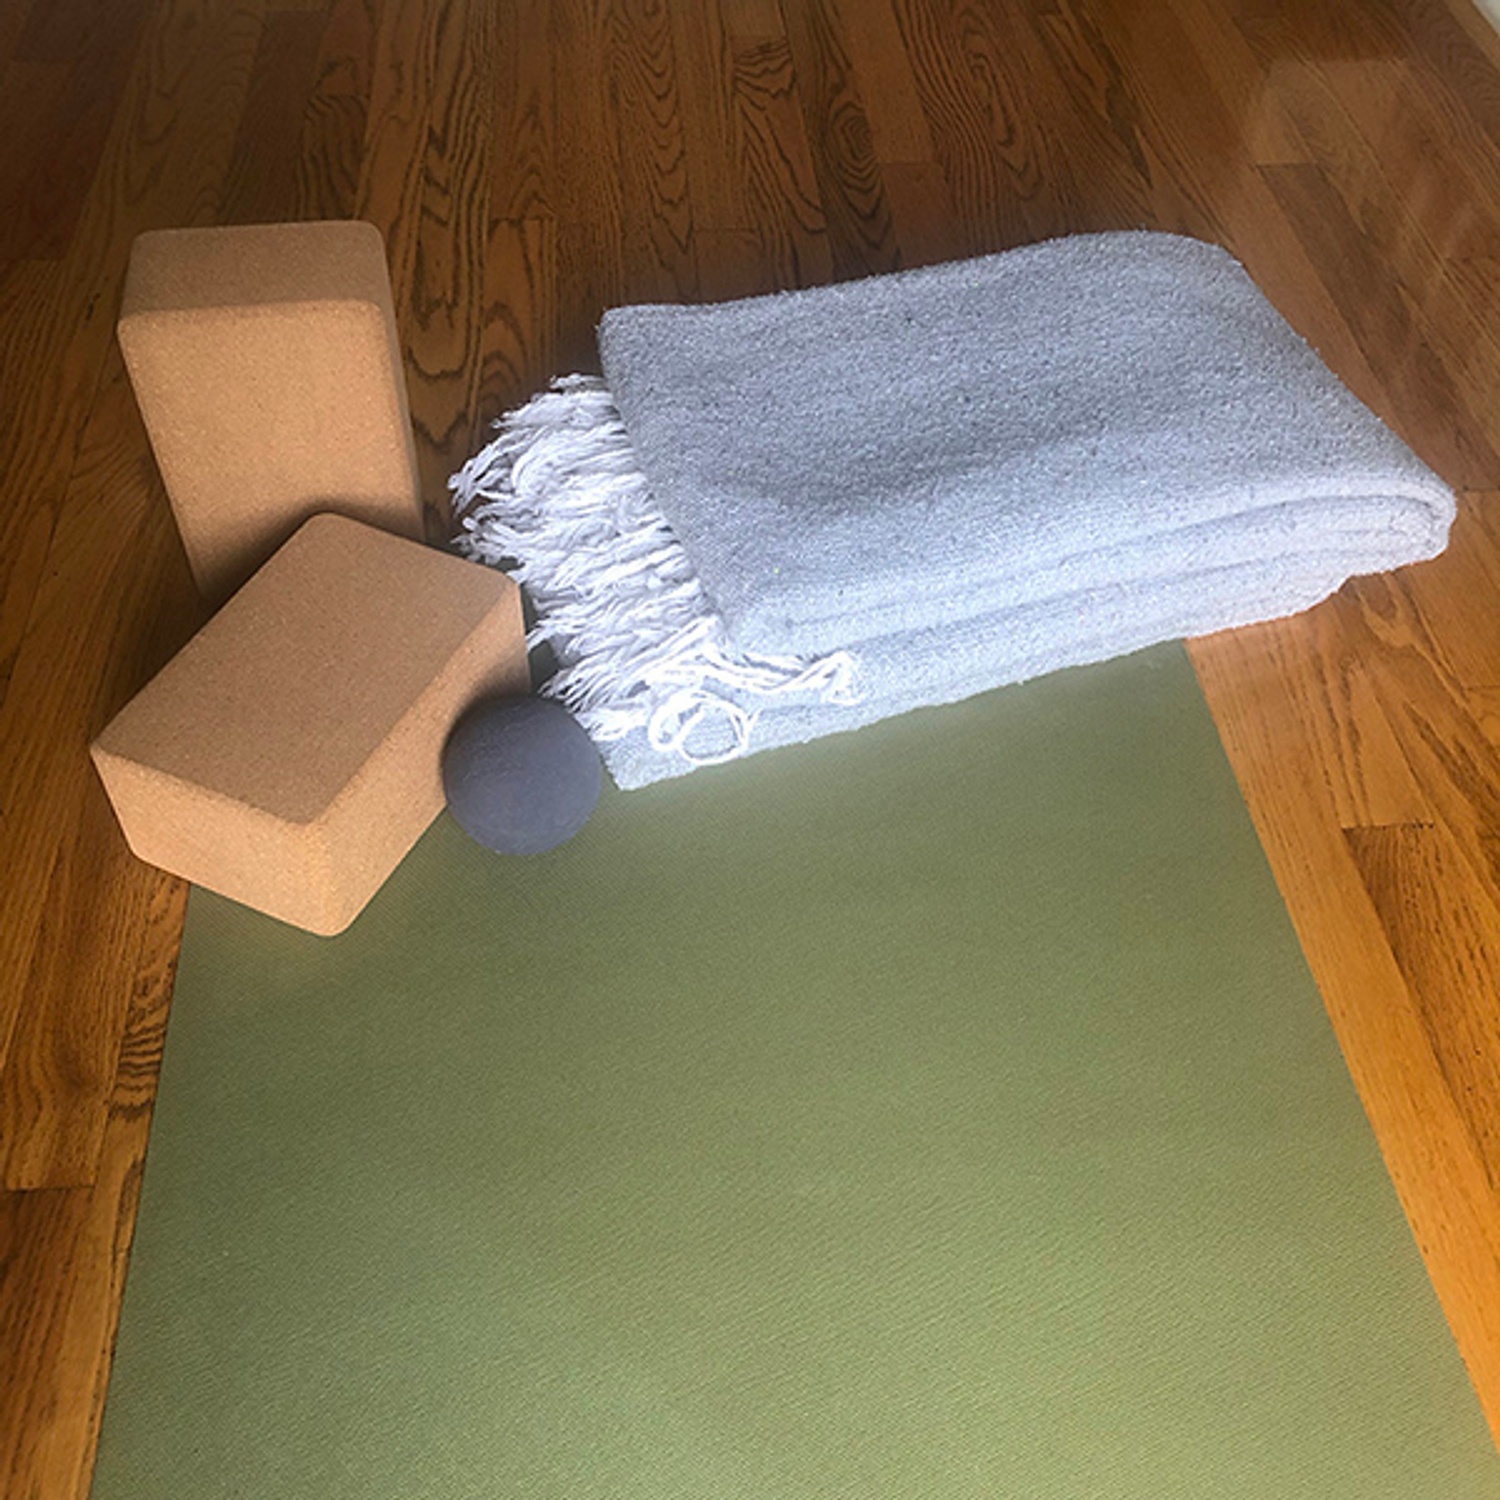 Make It Yoga Mat Disinfectant Greenopedia Academy